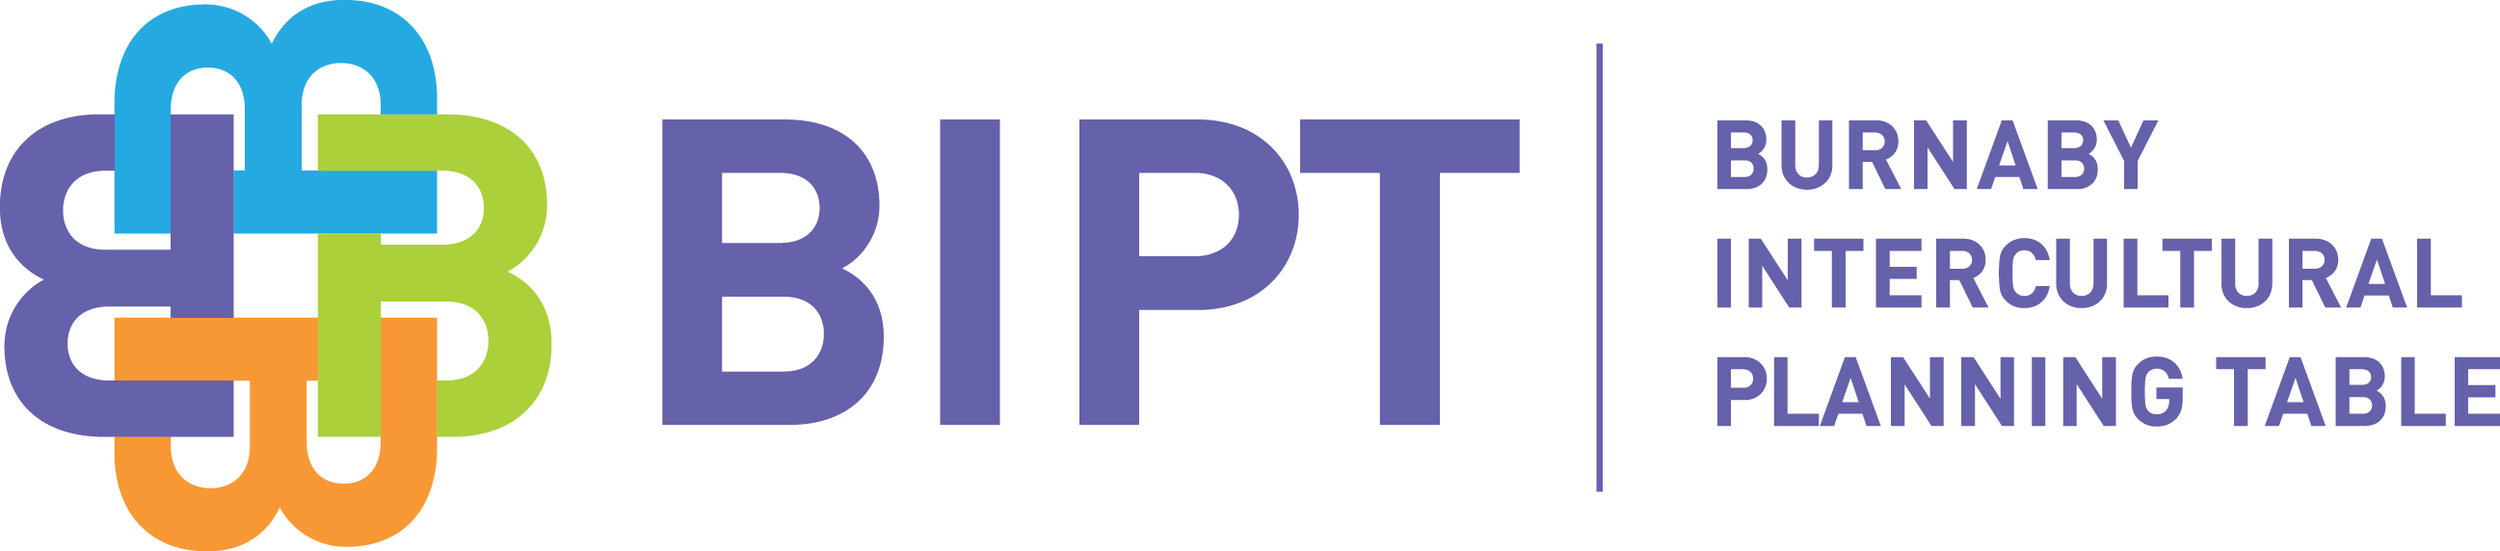 BIPT Logo_RGB.jpg